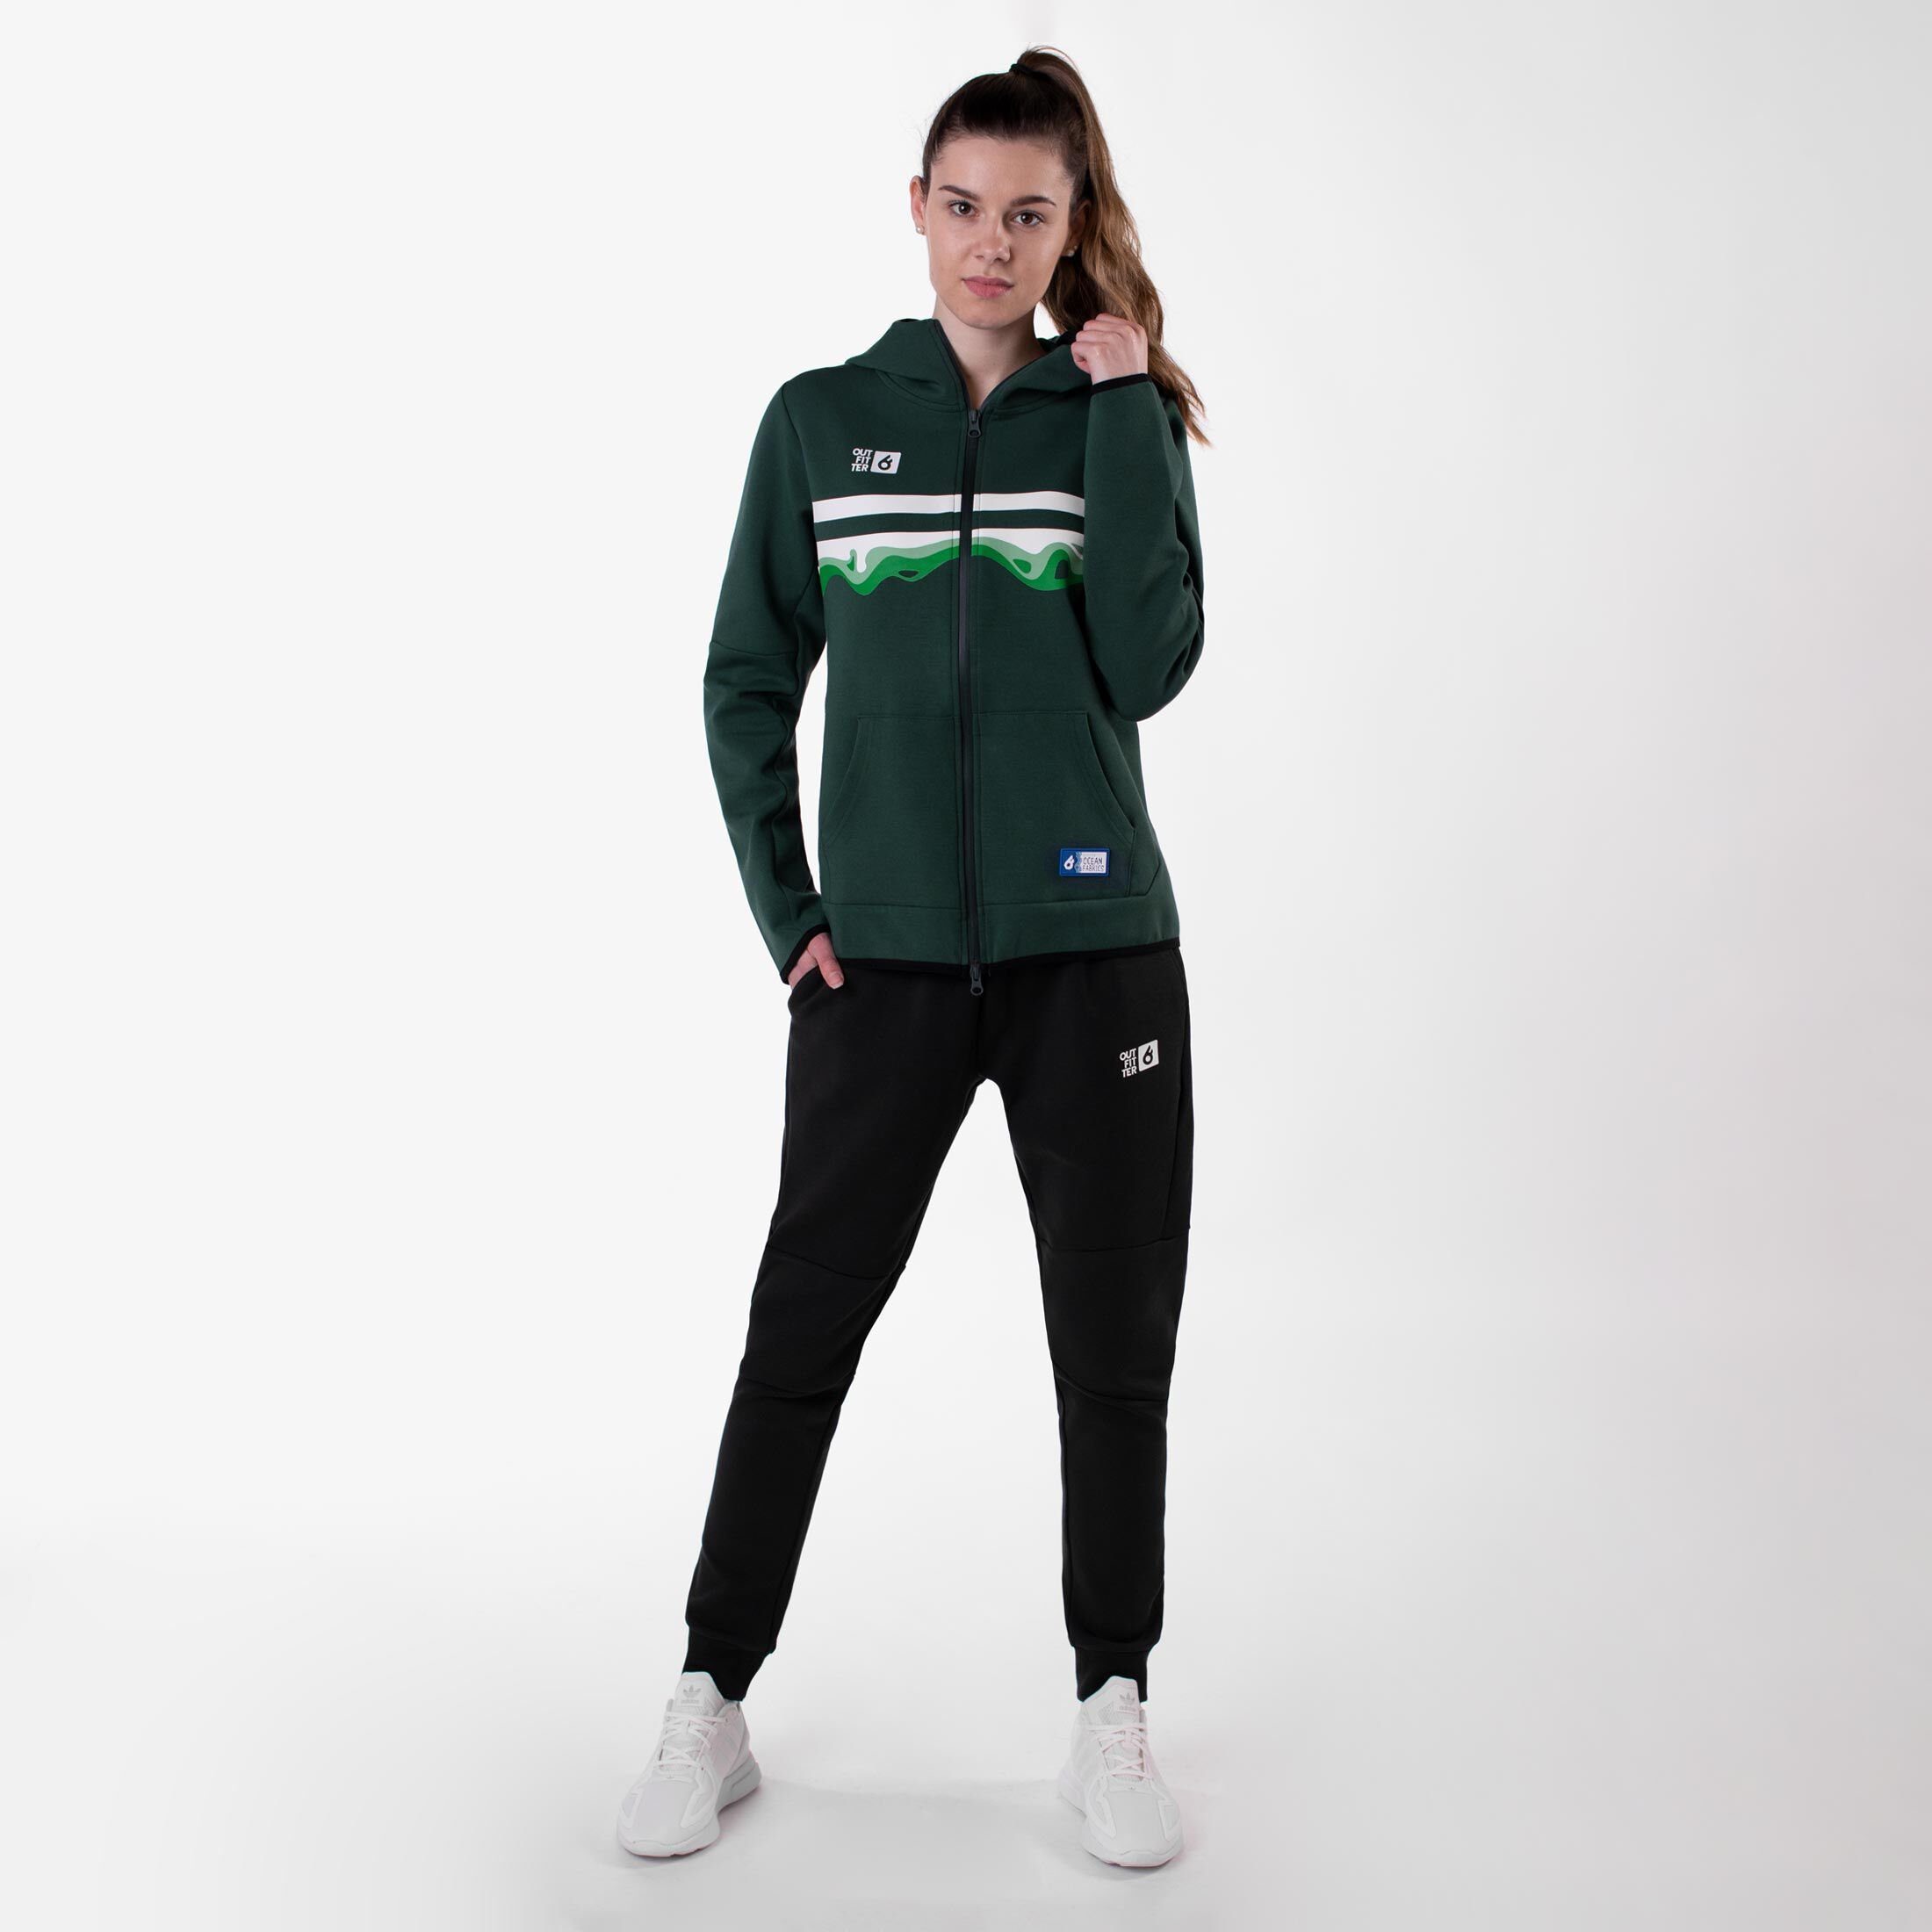 Outfitter Trainingsanzug Ocean Fabrics Jogginganzug Damen grün / schwarz | Trainingsanzüge